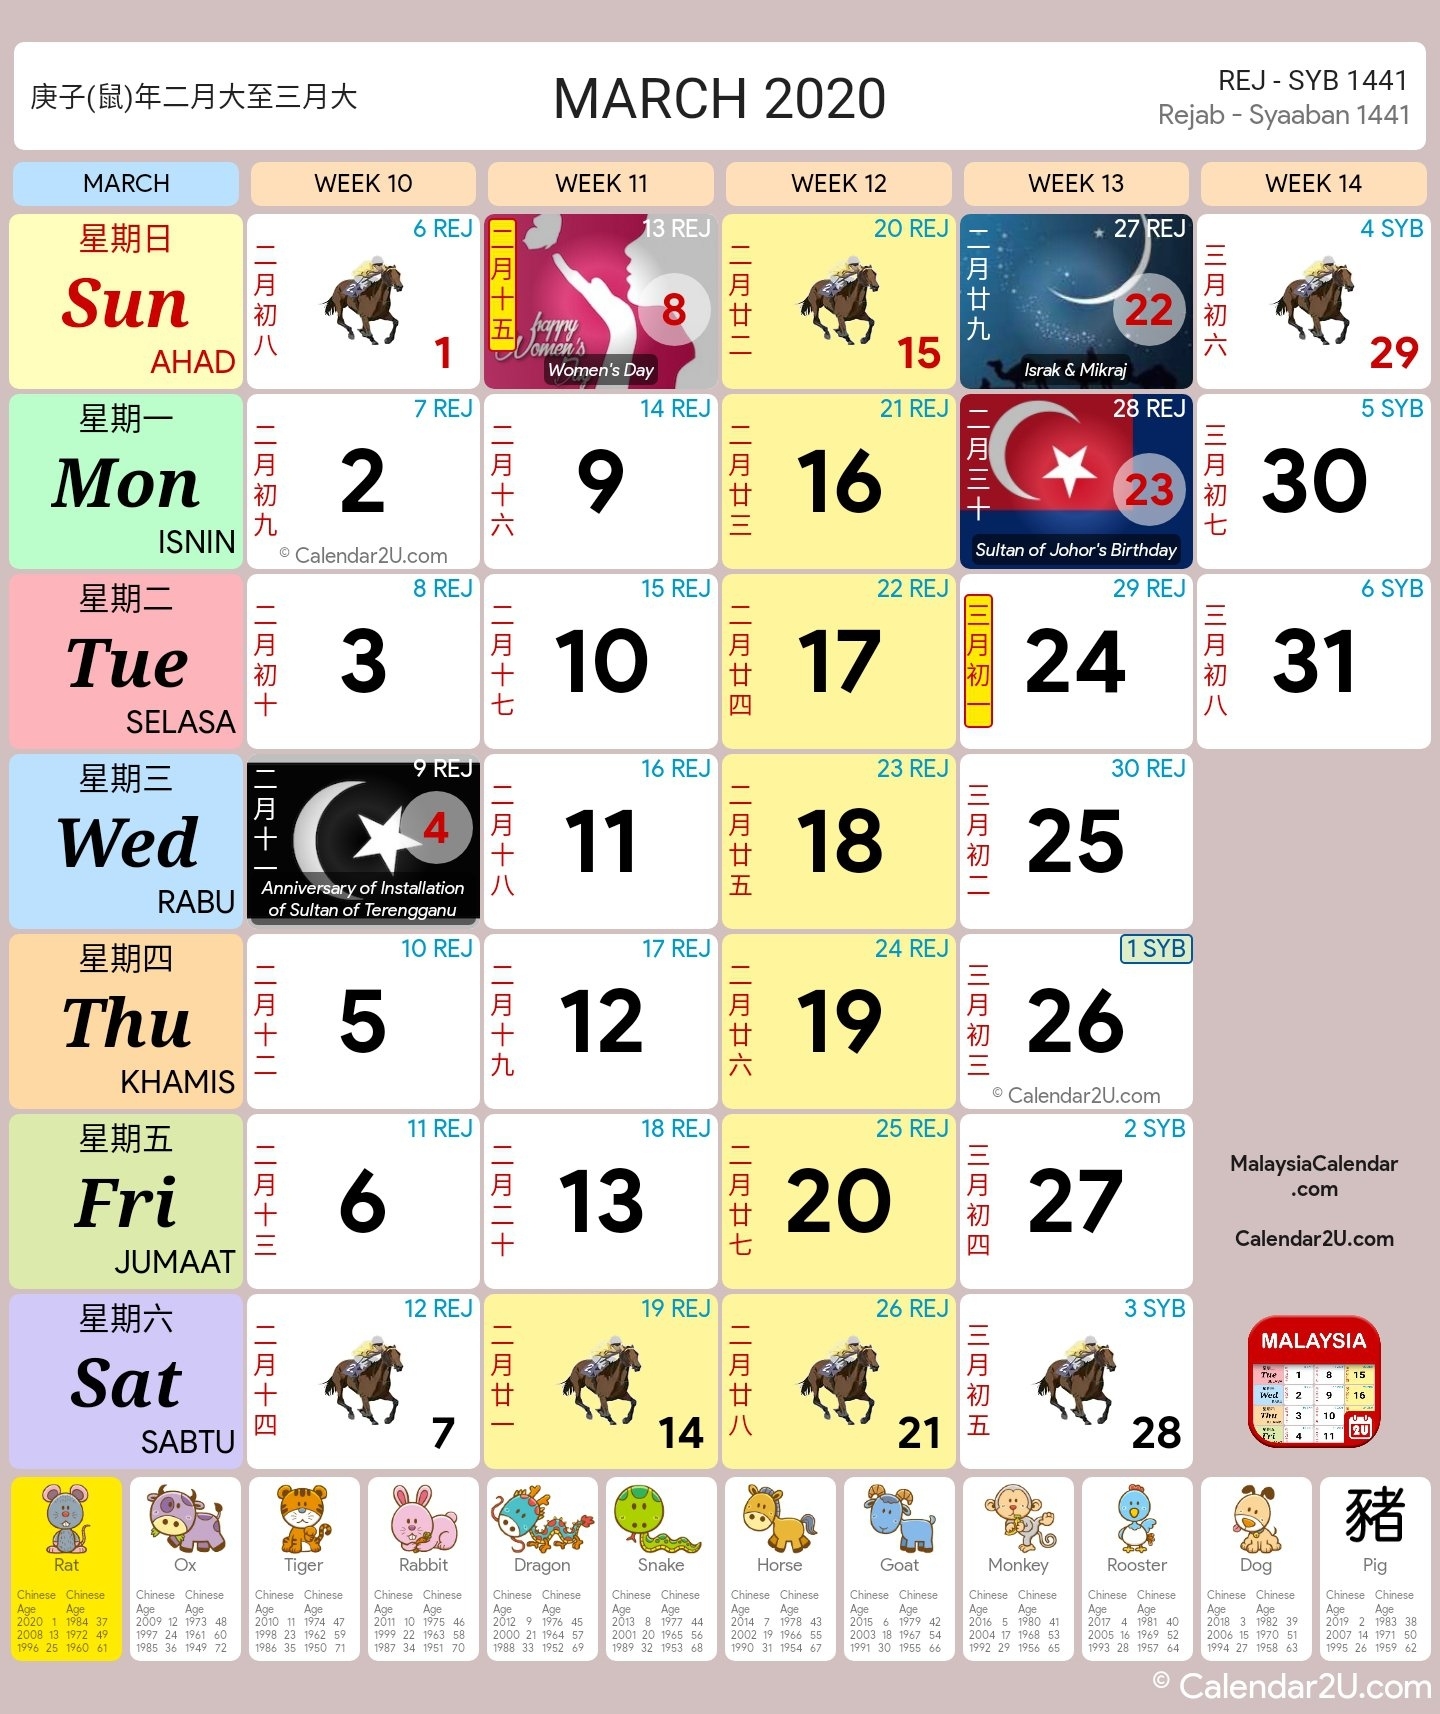 Malaysia Calendar Year 2020 (School Holiday) - Malaysia Calendar 2020 Calendar With Malaysia Holidays And School Holiday